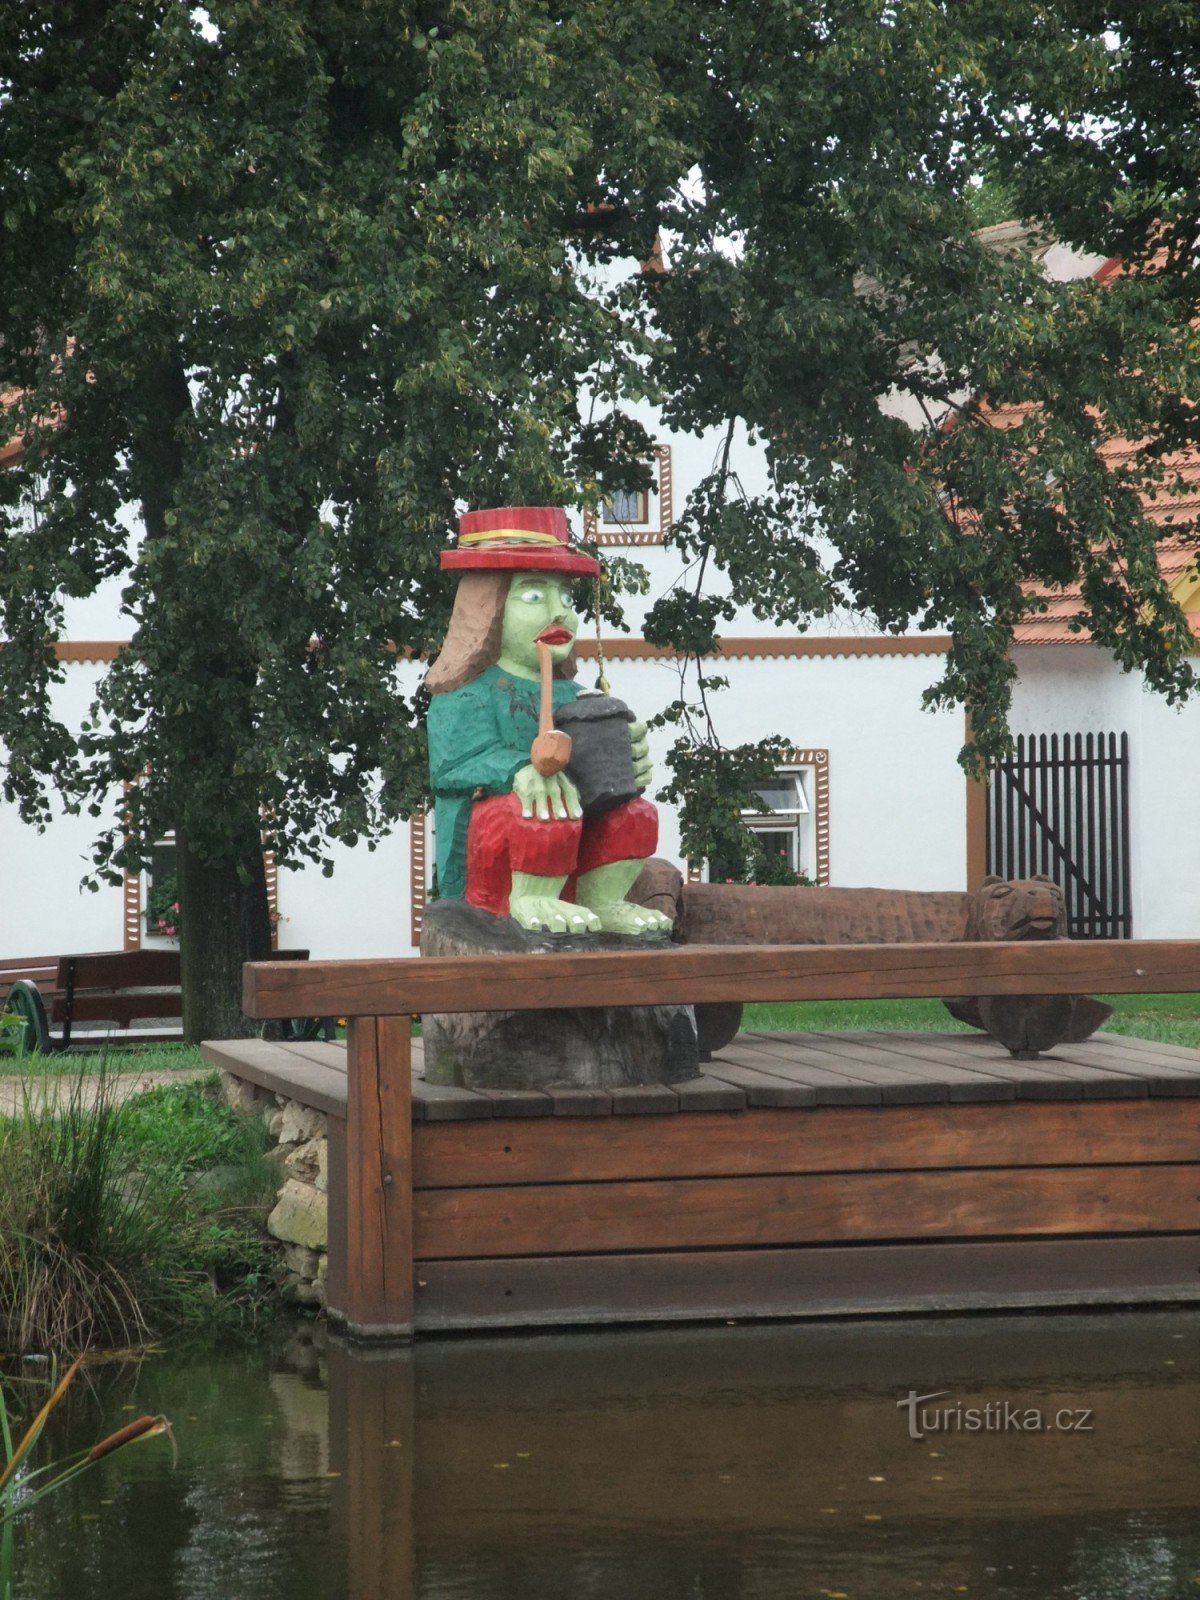 Waterman in Holašovice